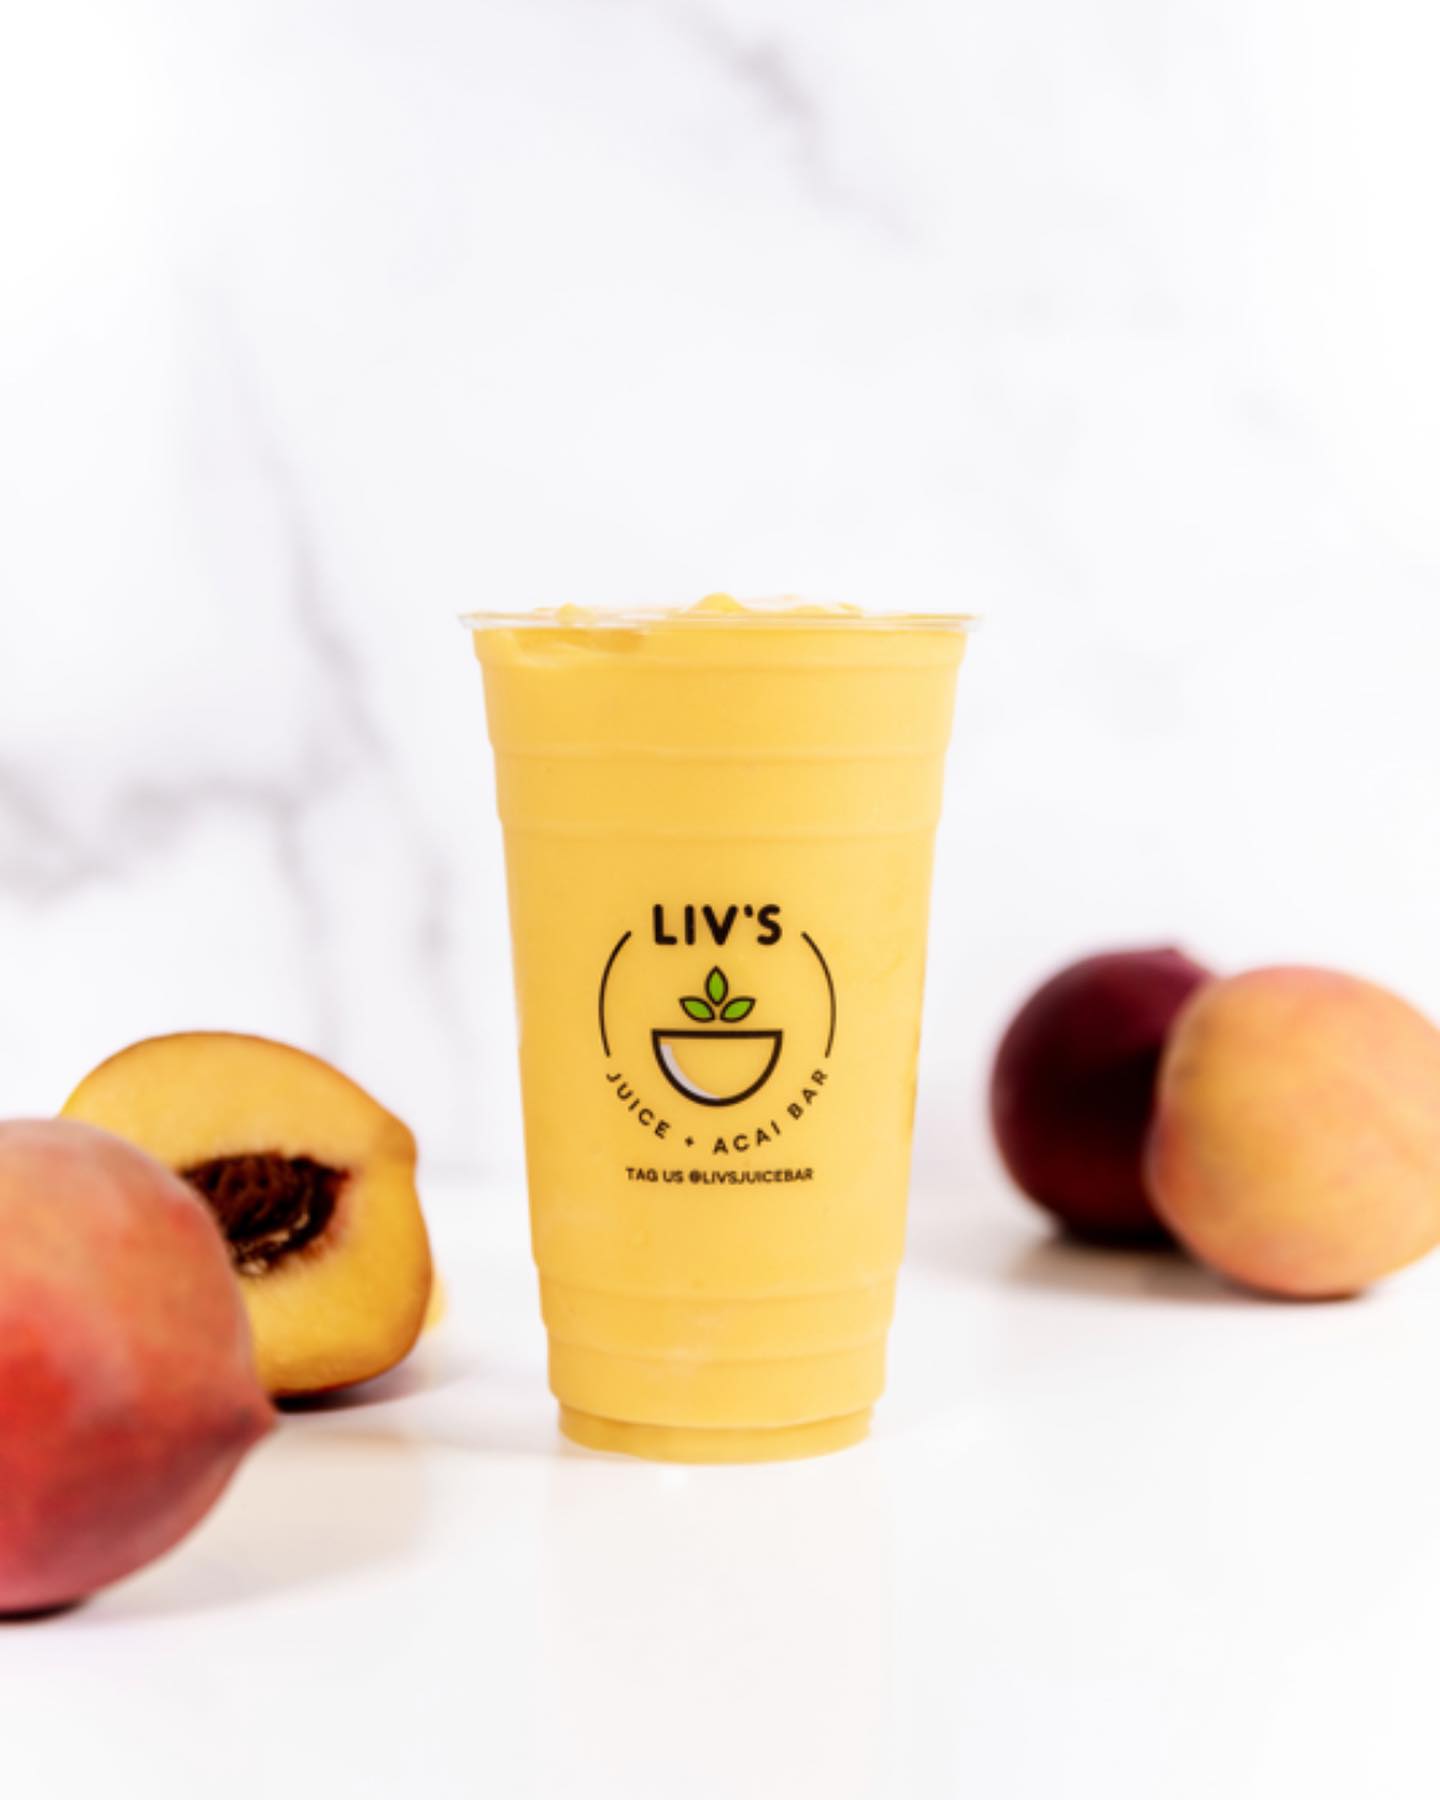 Liv's Juice + Acai Bar